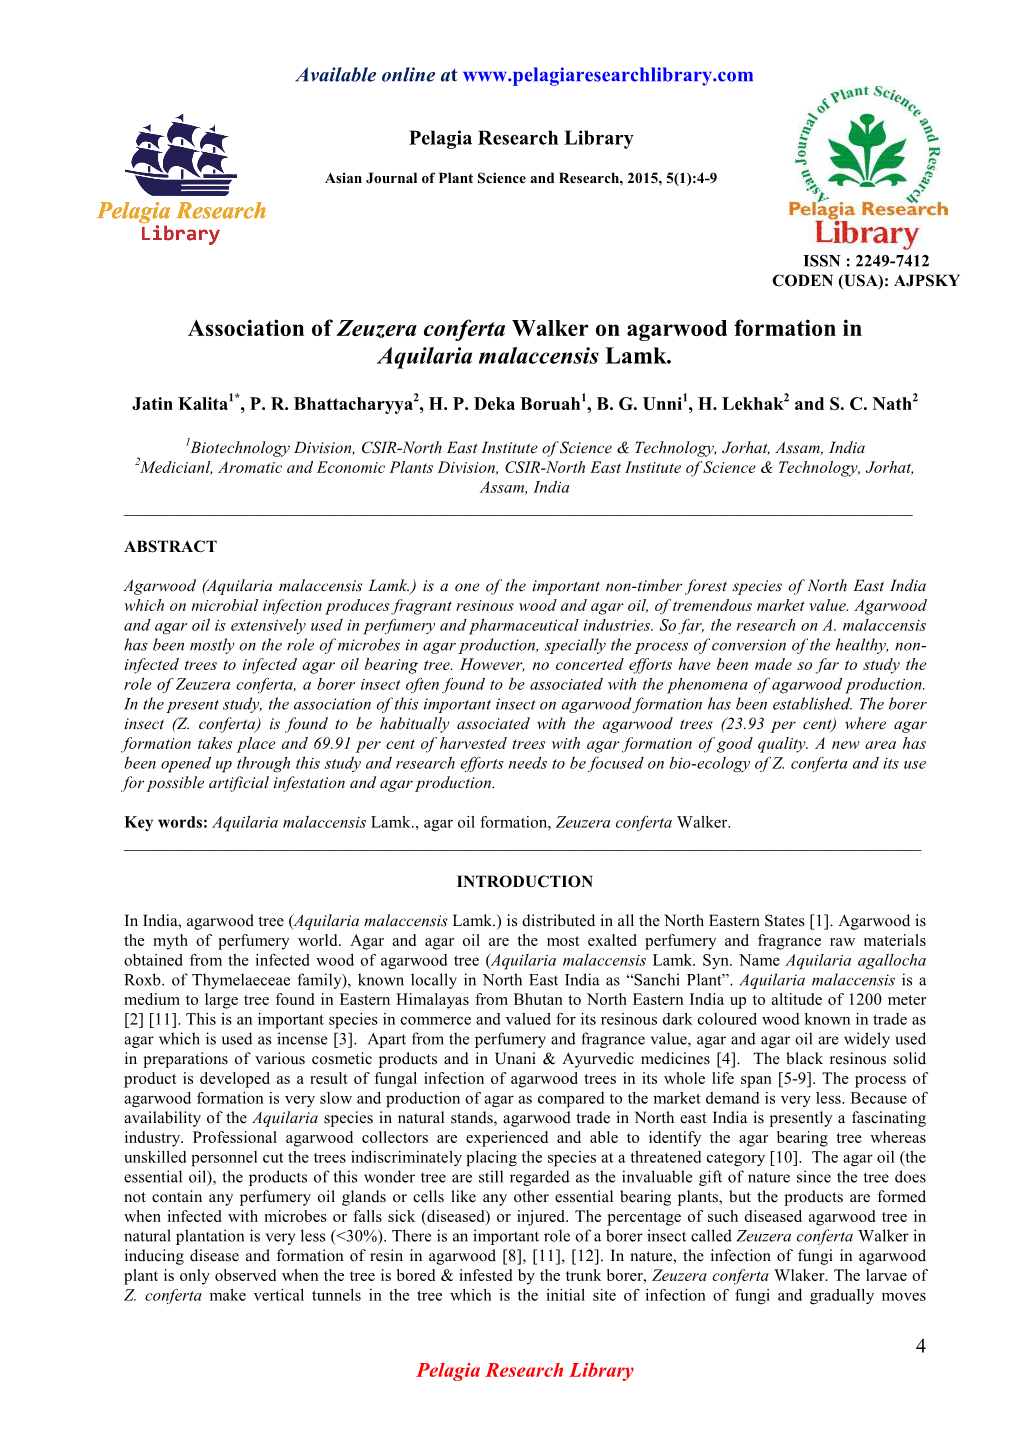 Association of Zeuzera Conferta Walker on Agarwood Formation in Aquilaria Malaccensis Lamk